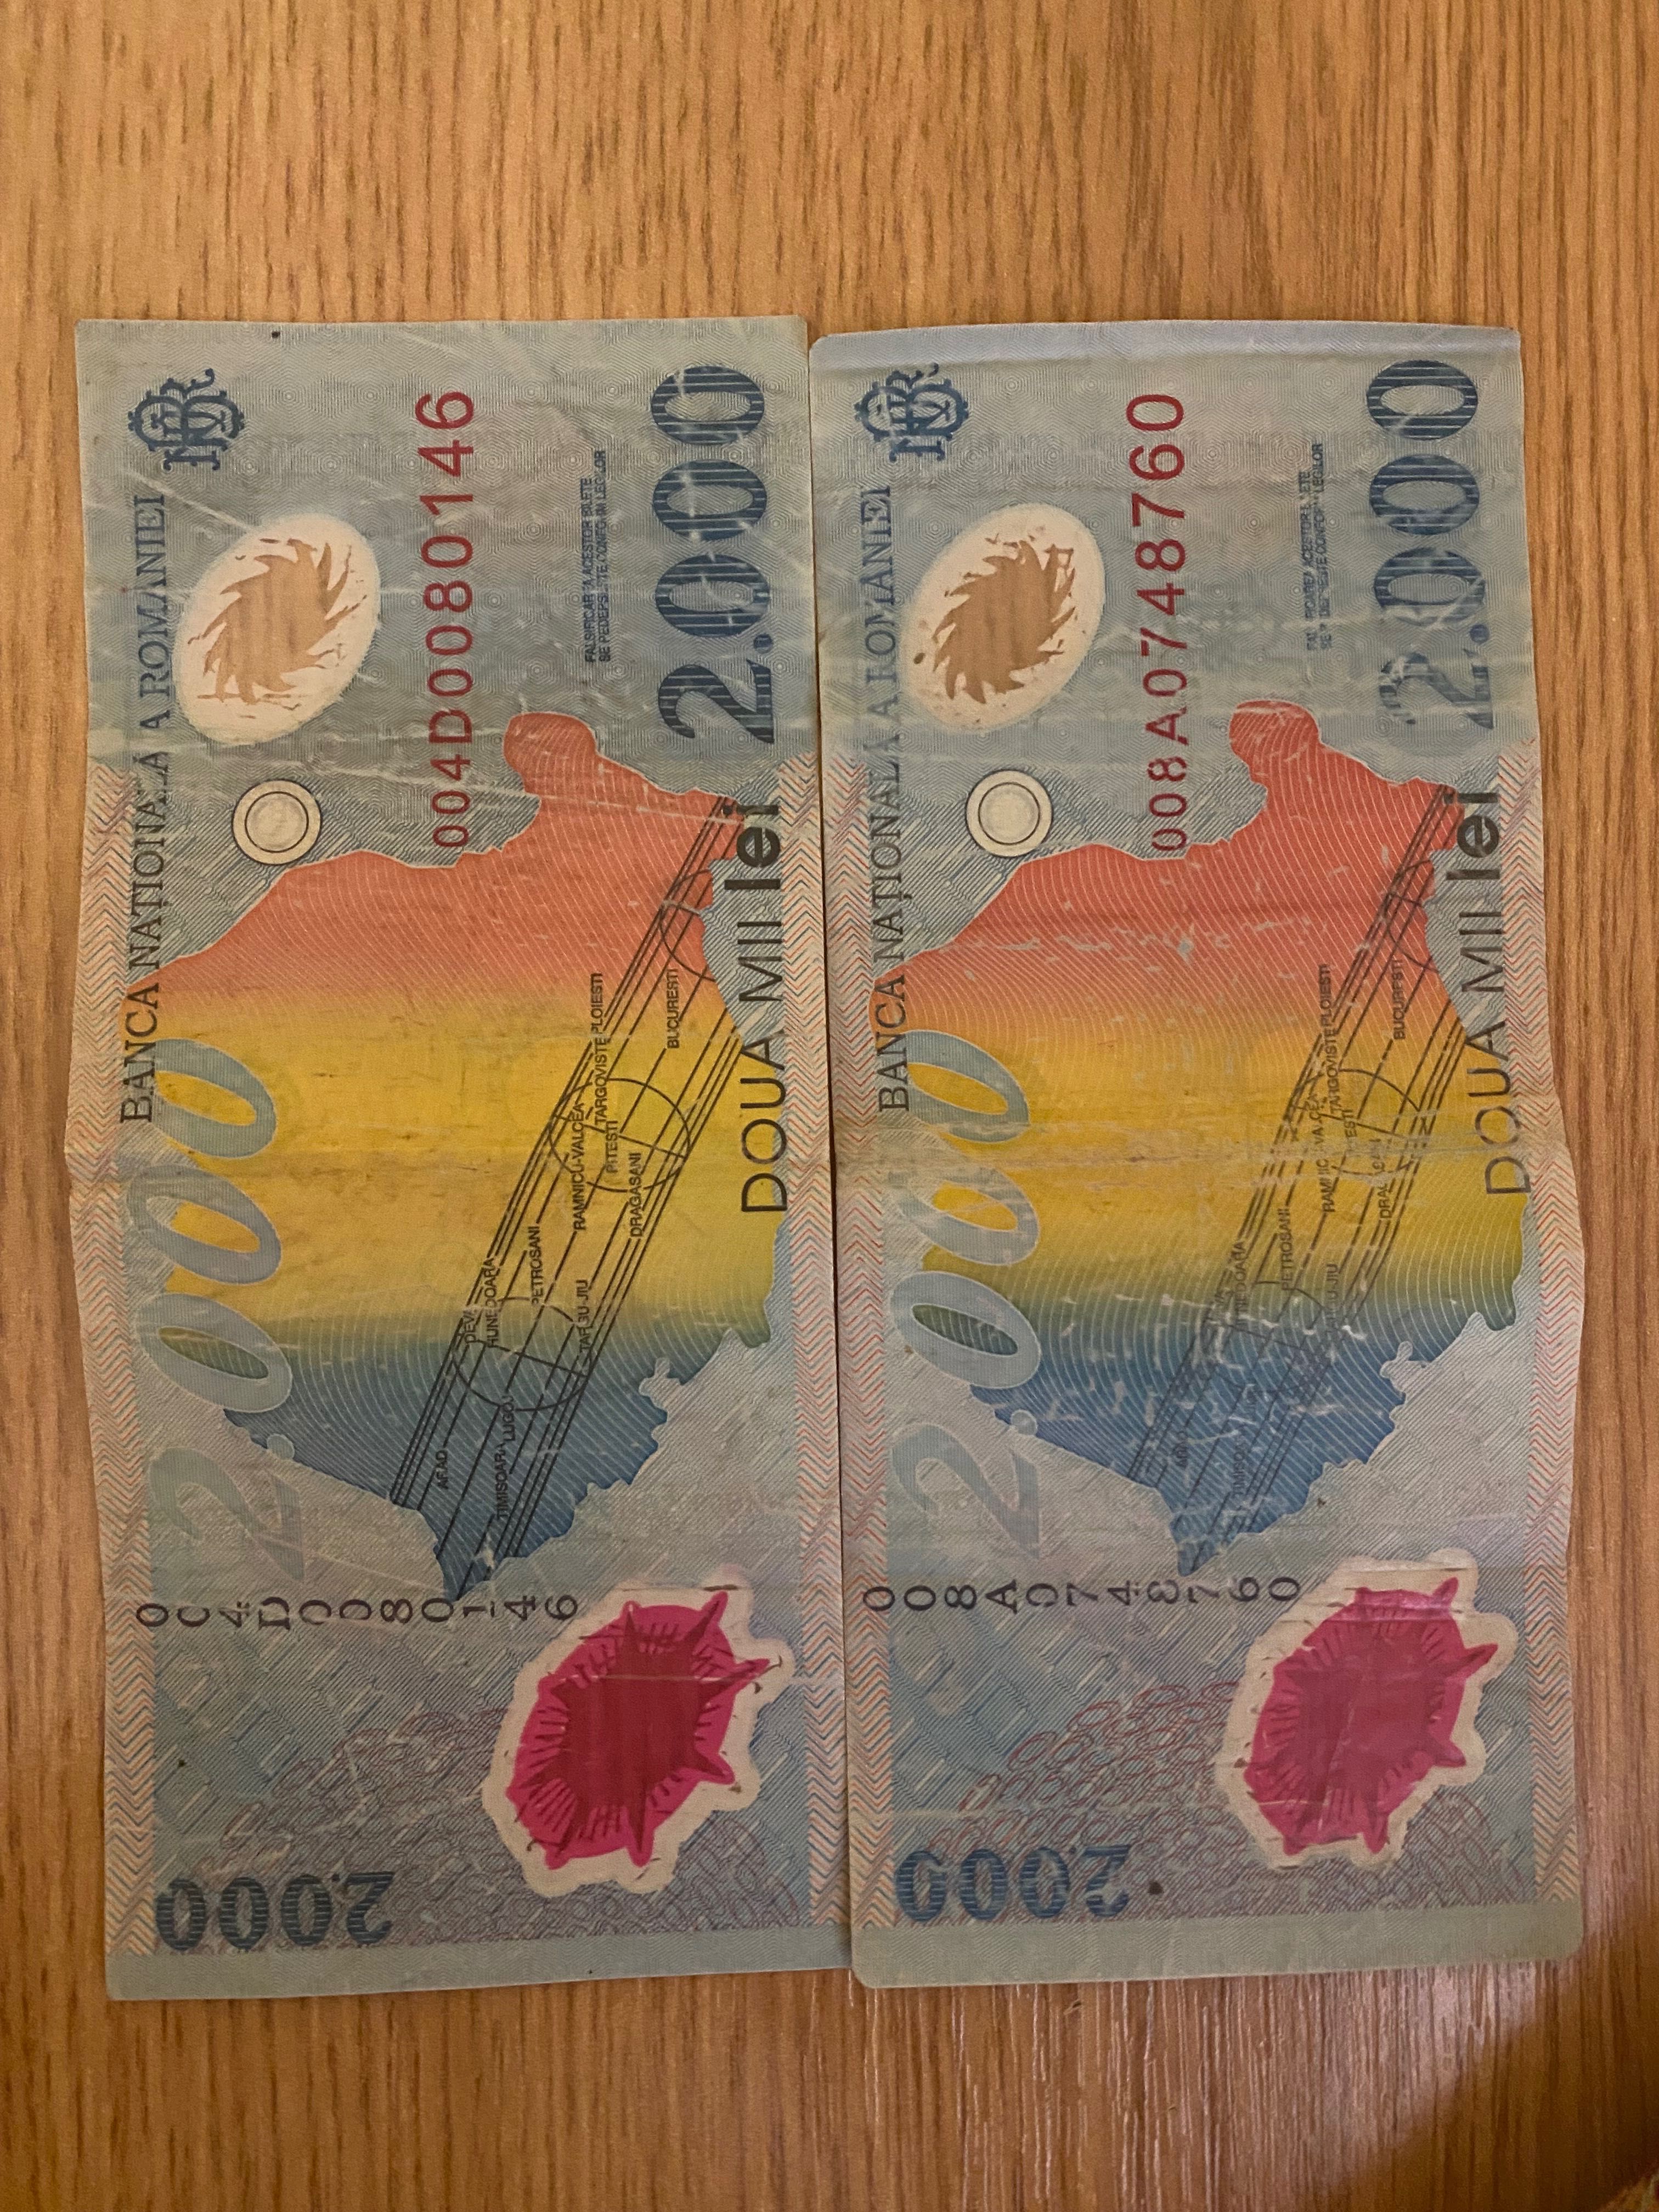 Bancnote 2000 lei Eclipsa 1999, bancnote Constantin Brâncusi